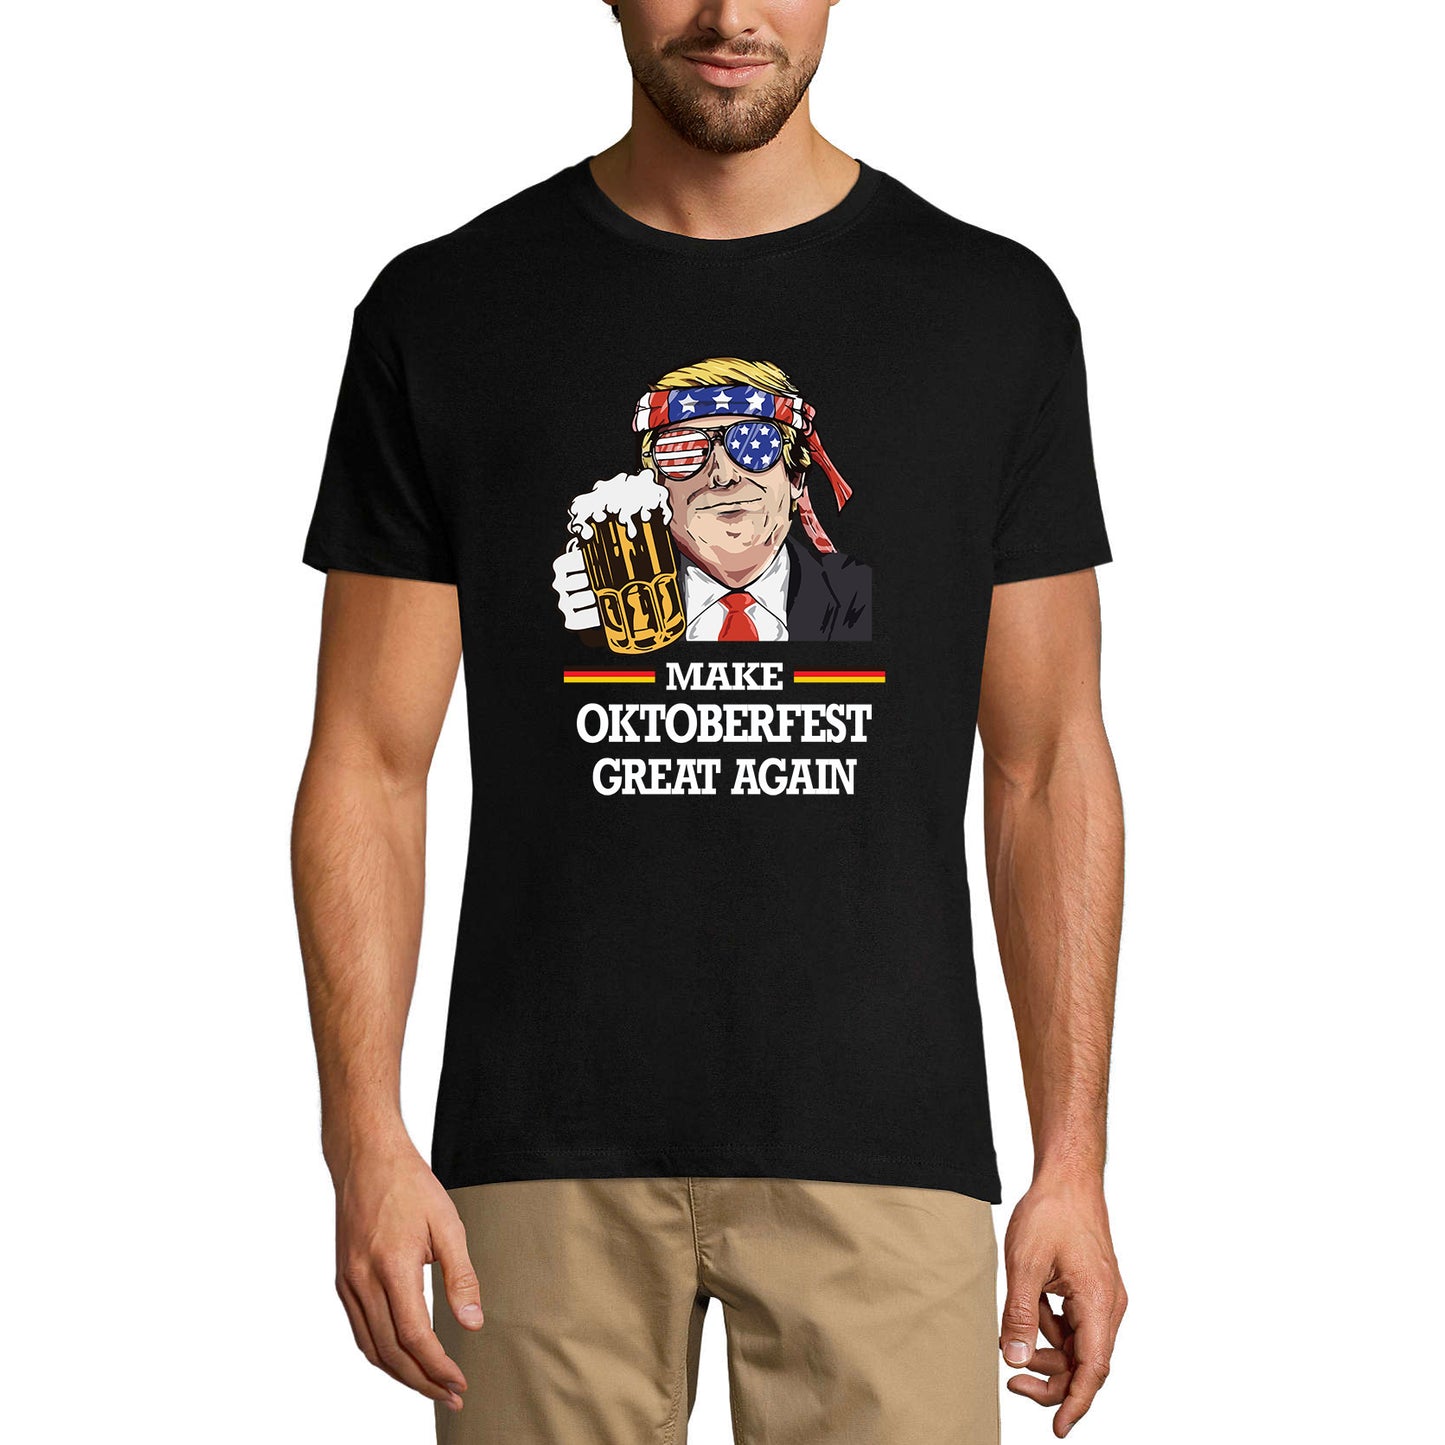 ULTRABASIC Men's T-Shirt Make Oktoberfest Great Again - Funny Donald Trump Beer Lover Tee Shirt